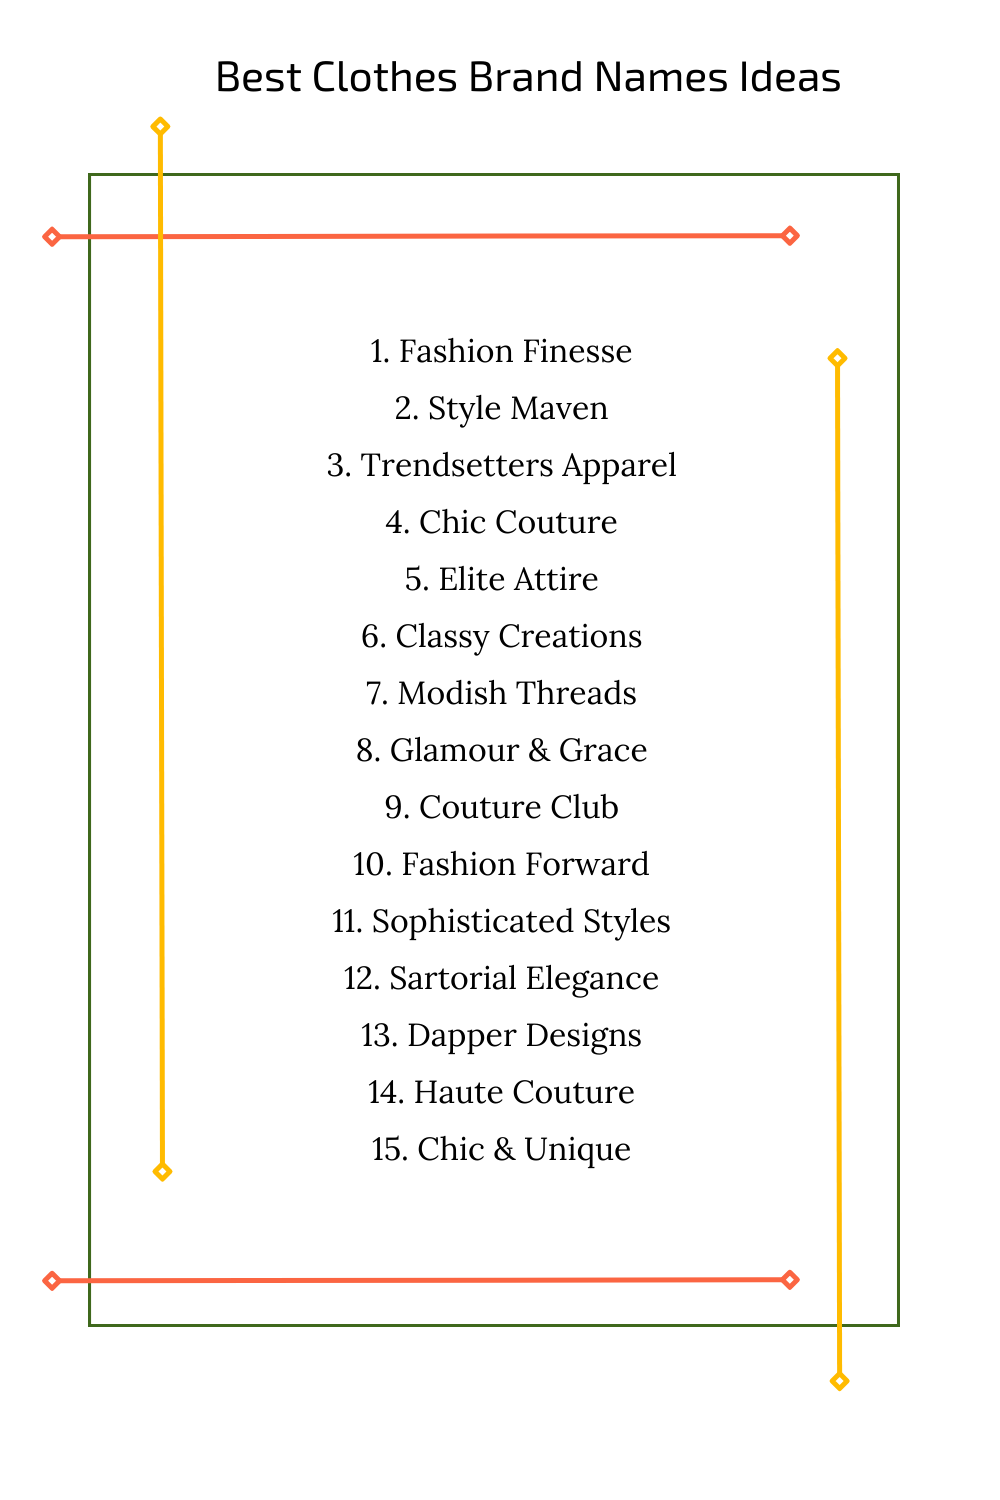 Best Clothes Brand Names Ideas